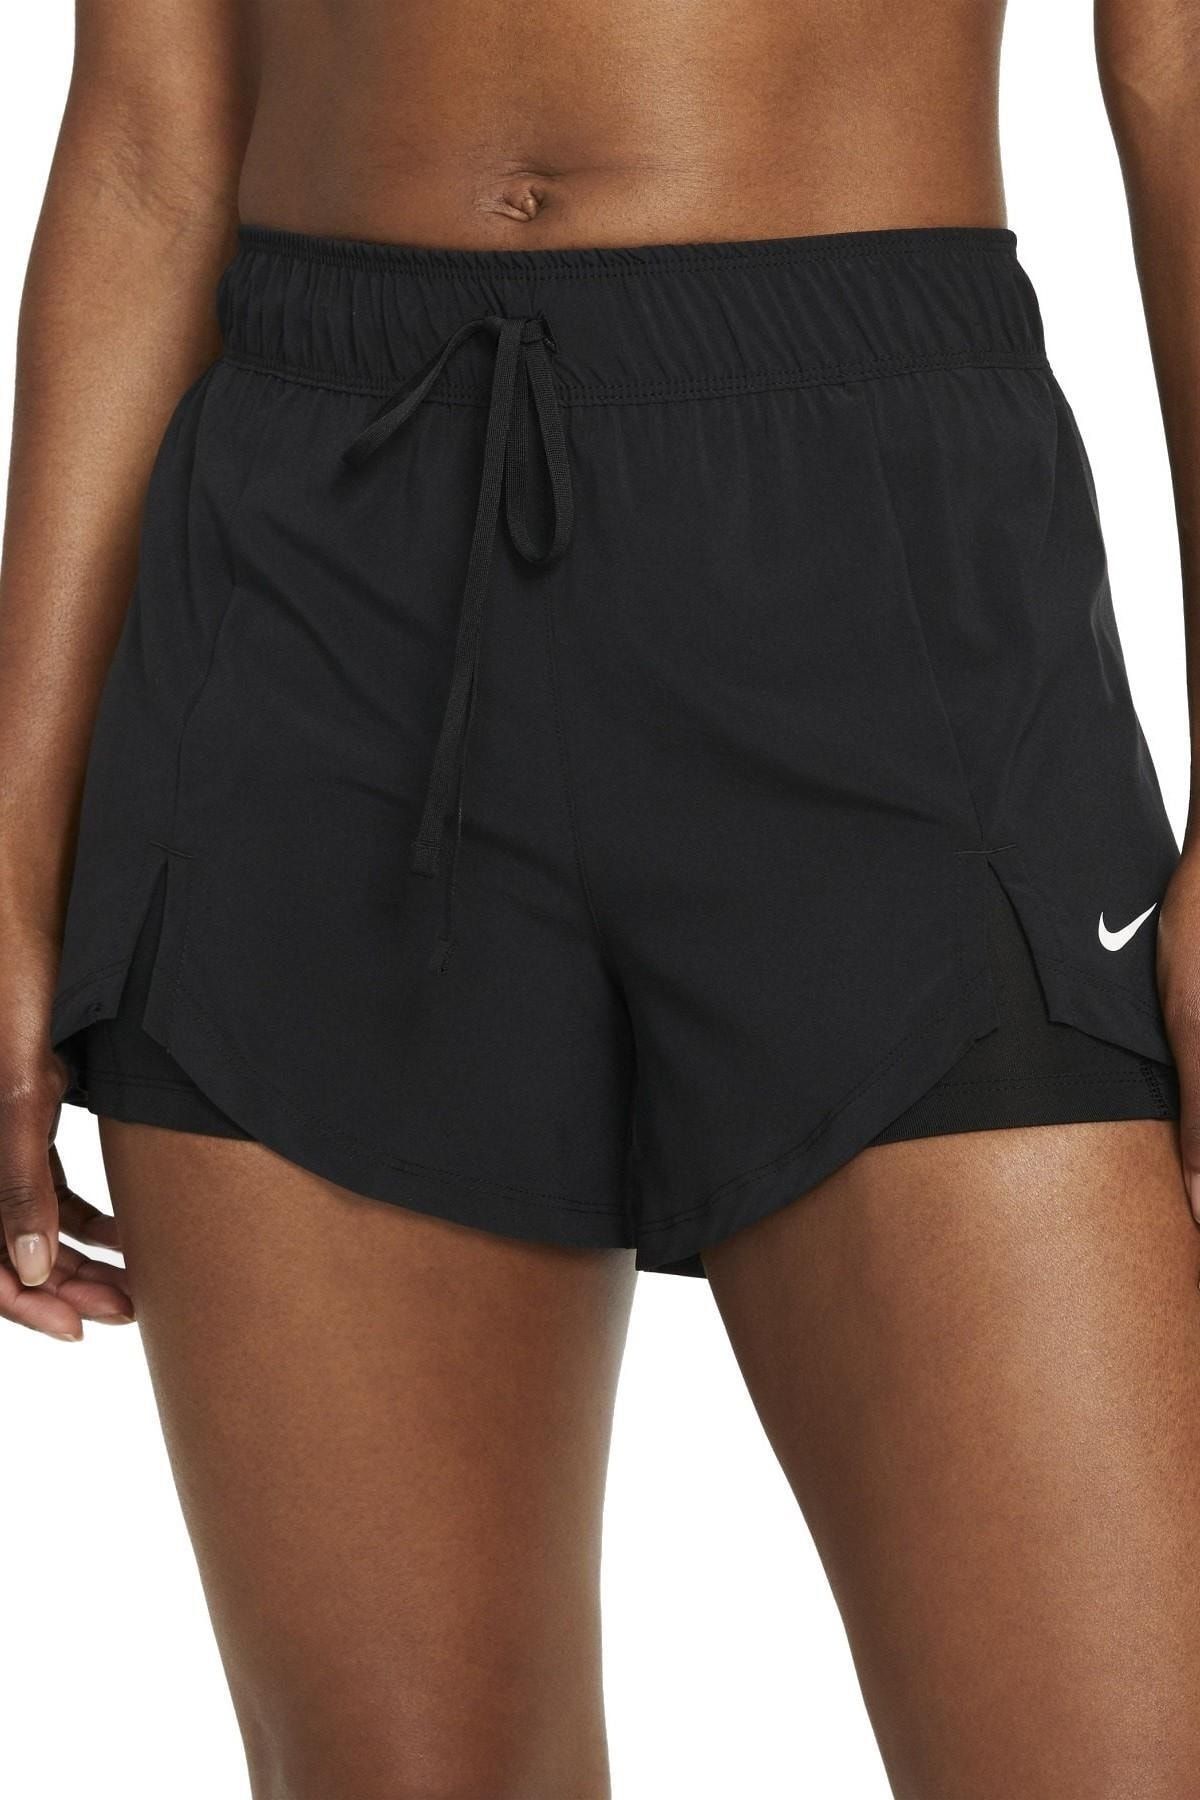 Nike Flex Essential 2-in-1 Training Shorts Taytlı Kadın Şortu Siyah